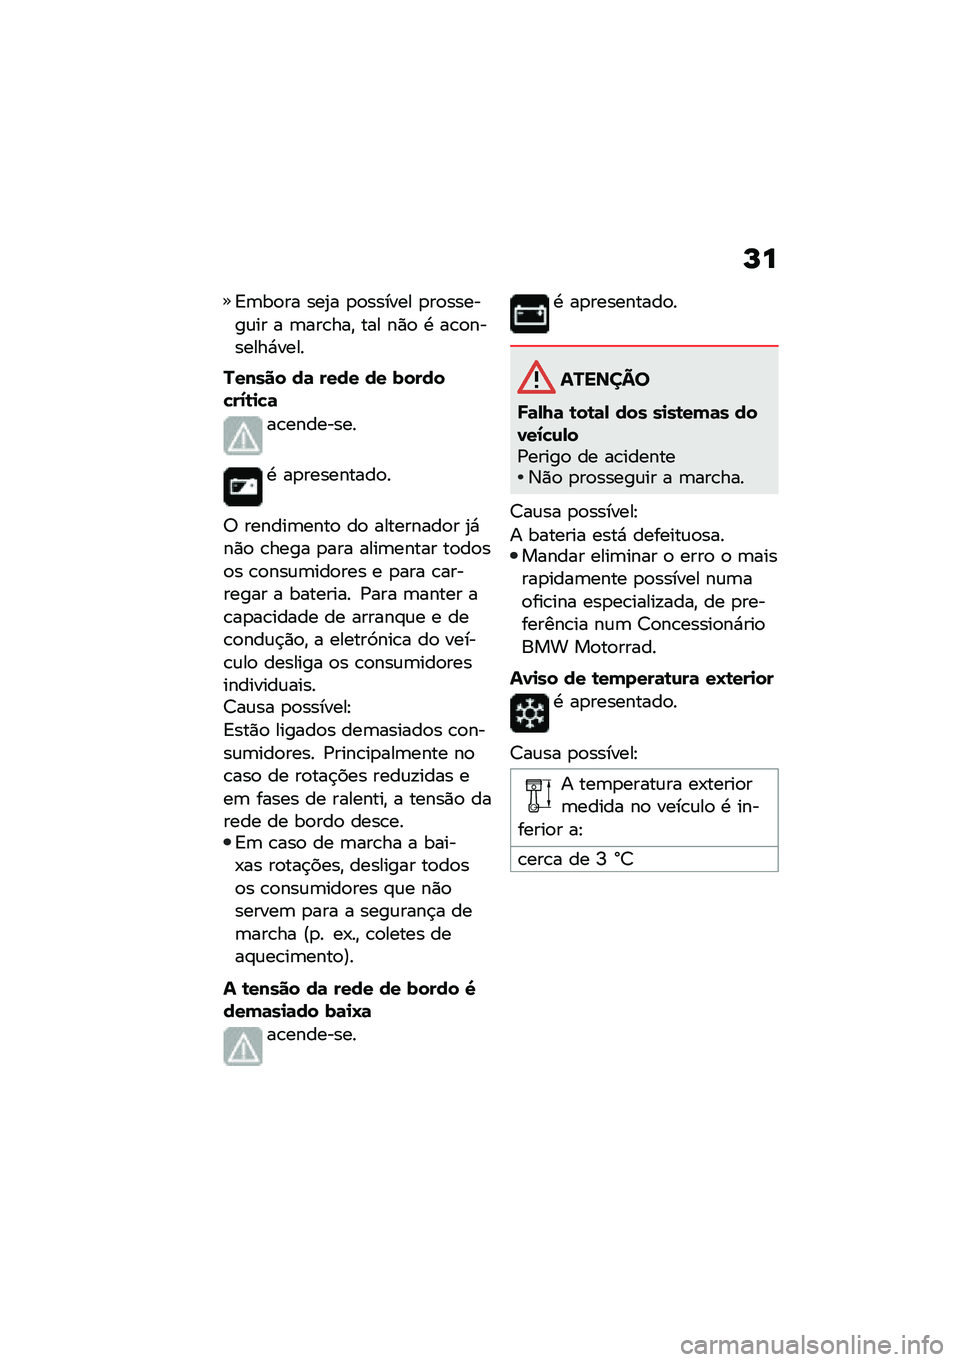 BMW MOTORRAD R NINE T URVAN G/S 2020  Manual do condutor (in Portuguese) �K�
�<�	��
�� ���2� �
�
������ �
��
������\f�� � �	���\b���" ��� ��)�
 �. ��\b�
�������*����
������ ��	 ���� �� ������"��2�\b�
�"�	
��\b��